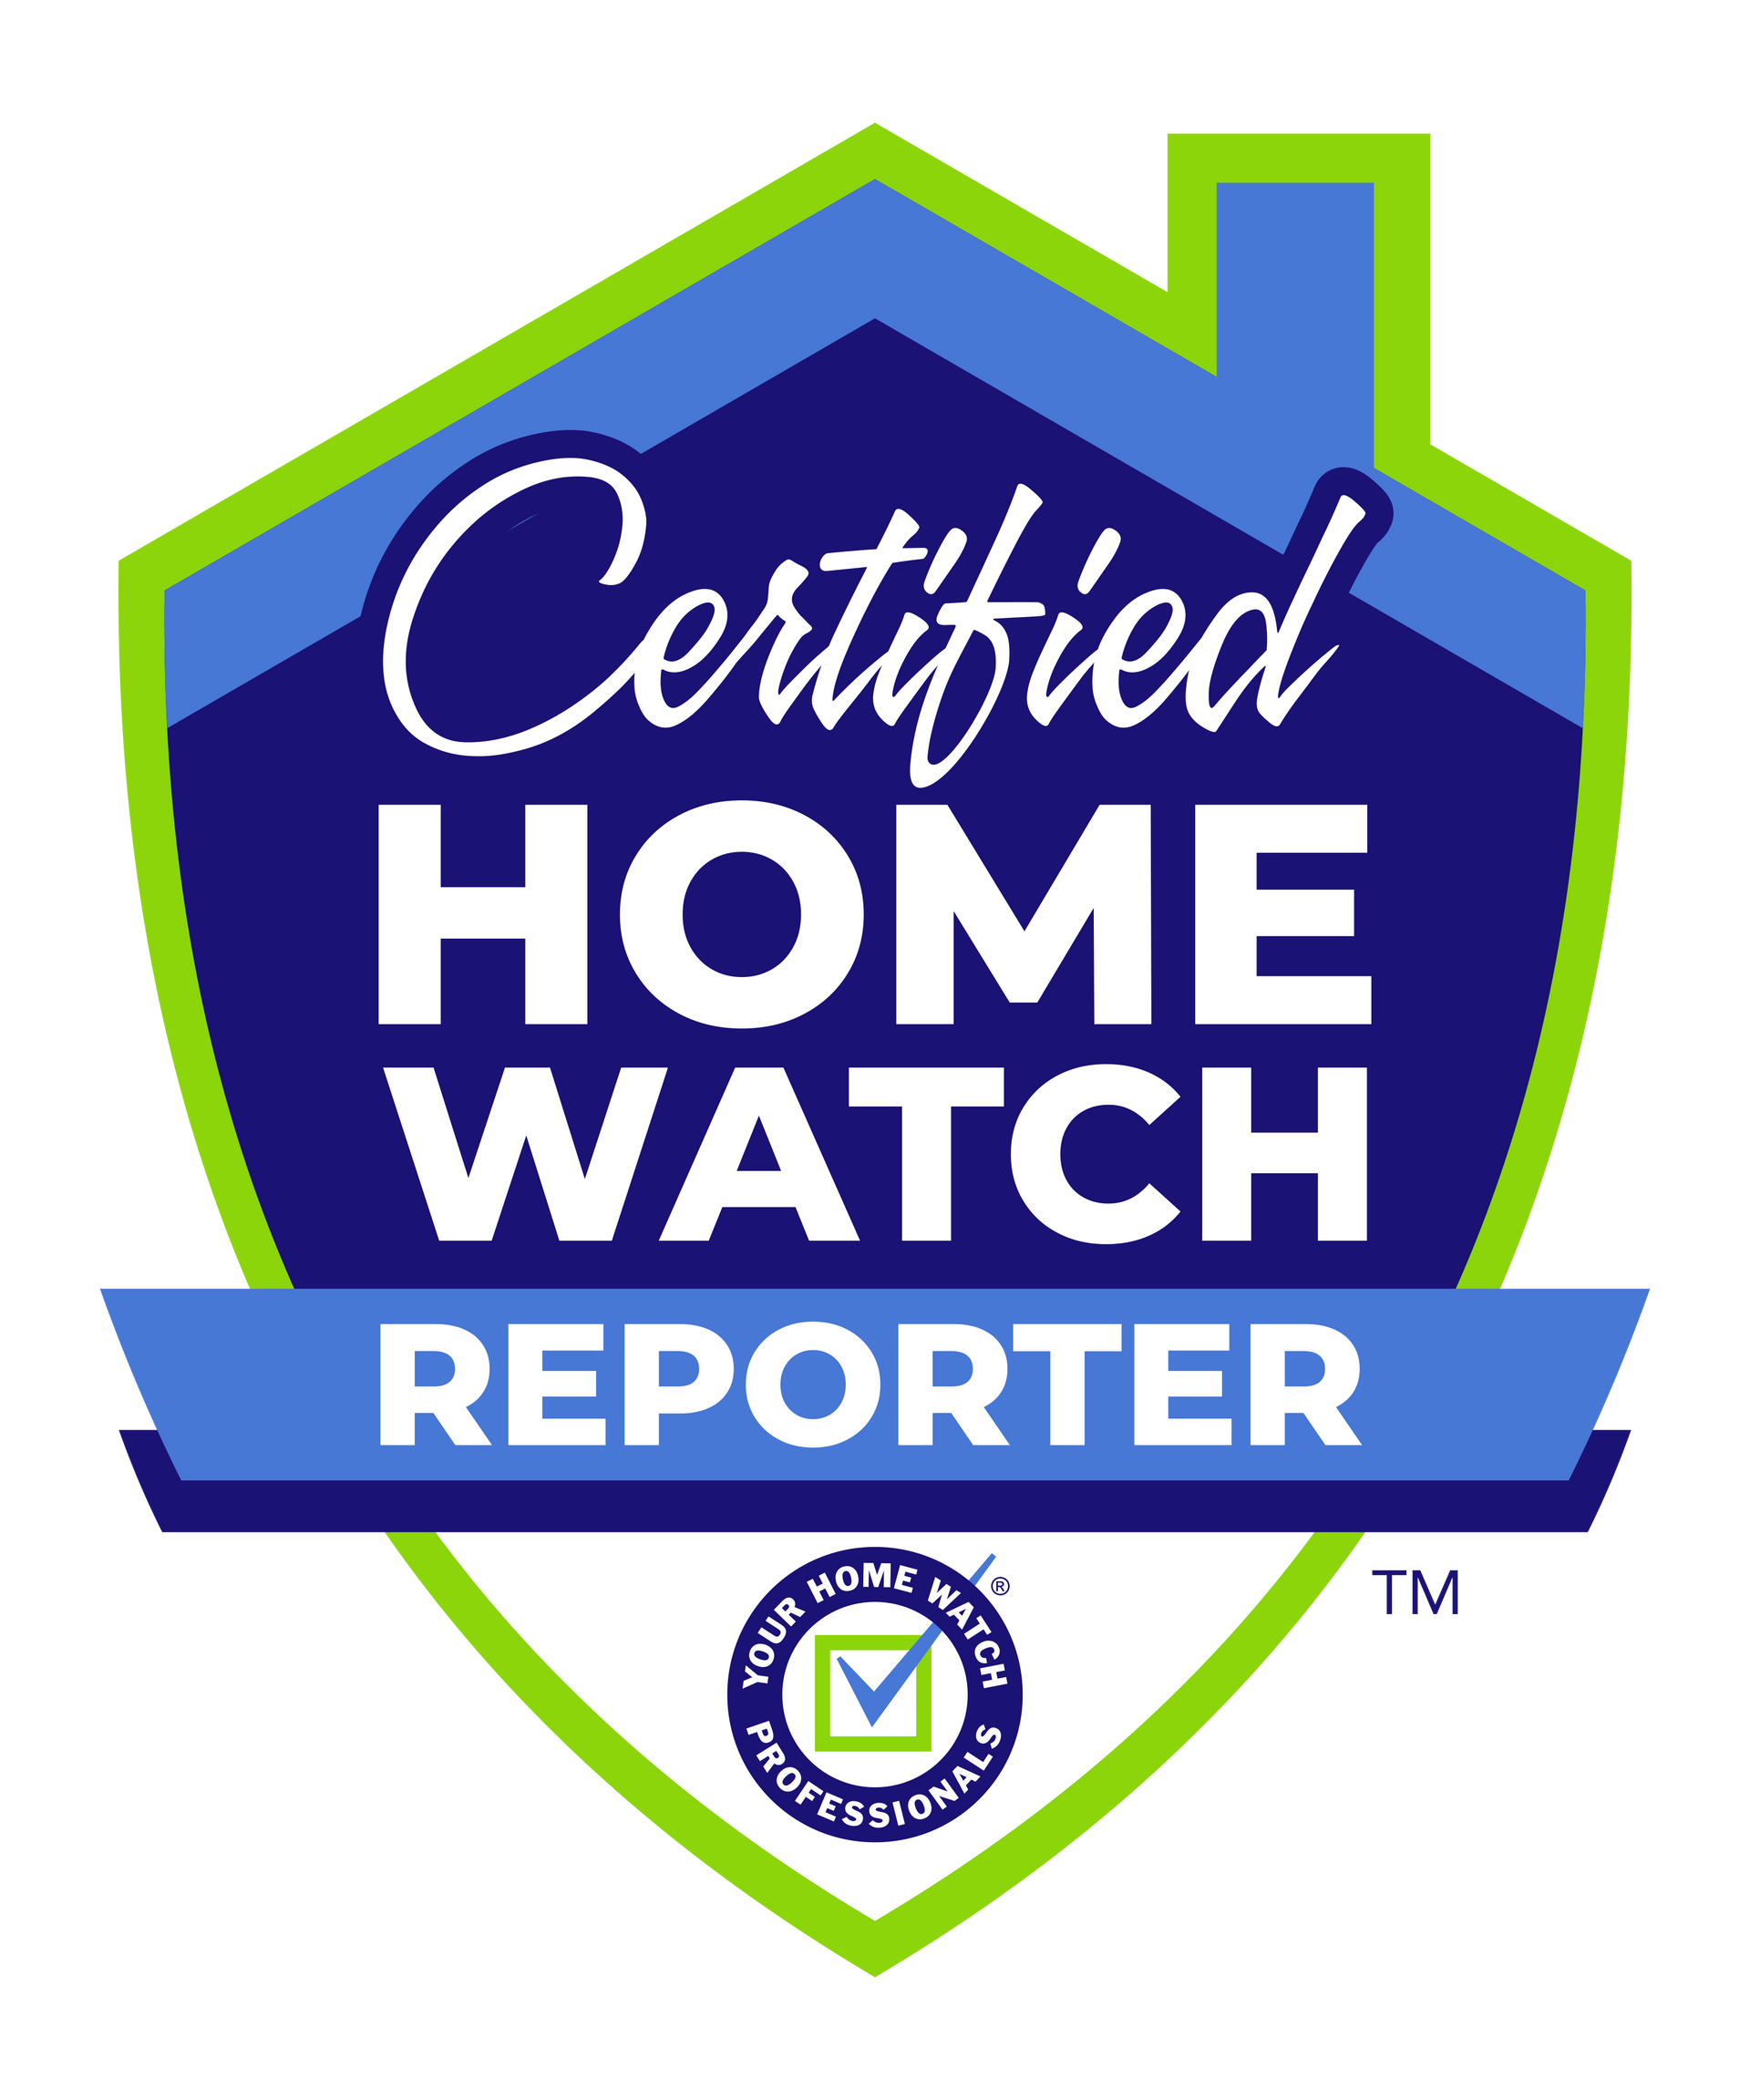 Find Home Watch - Home Watch Academy